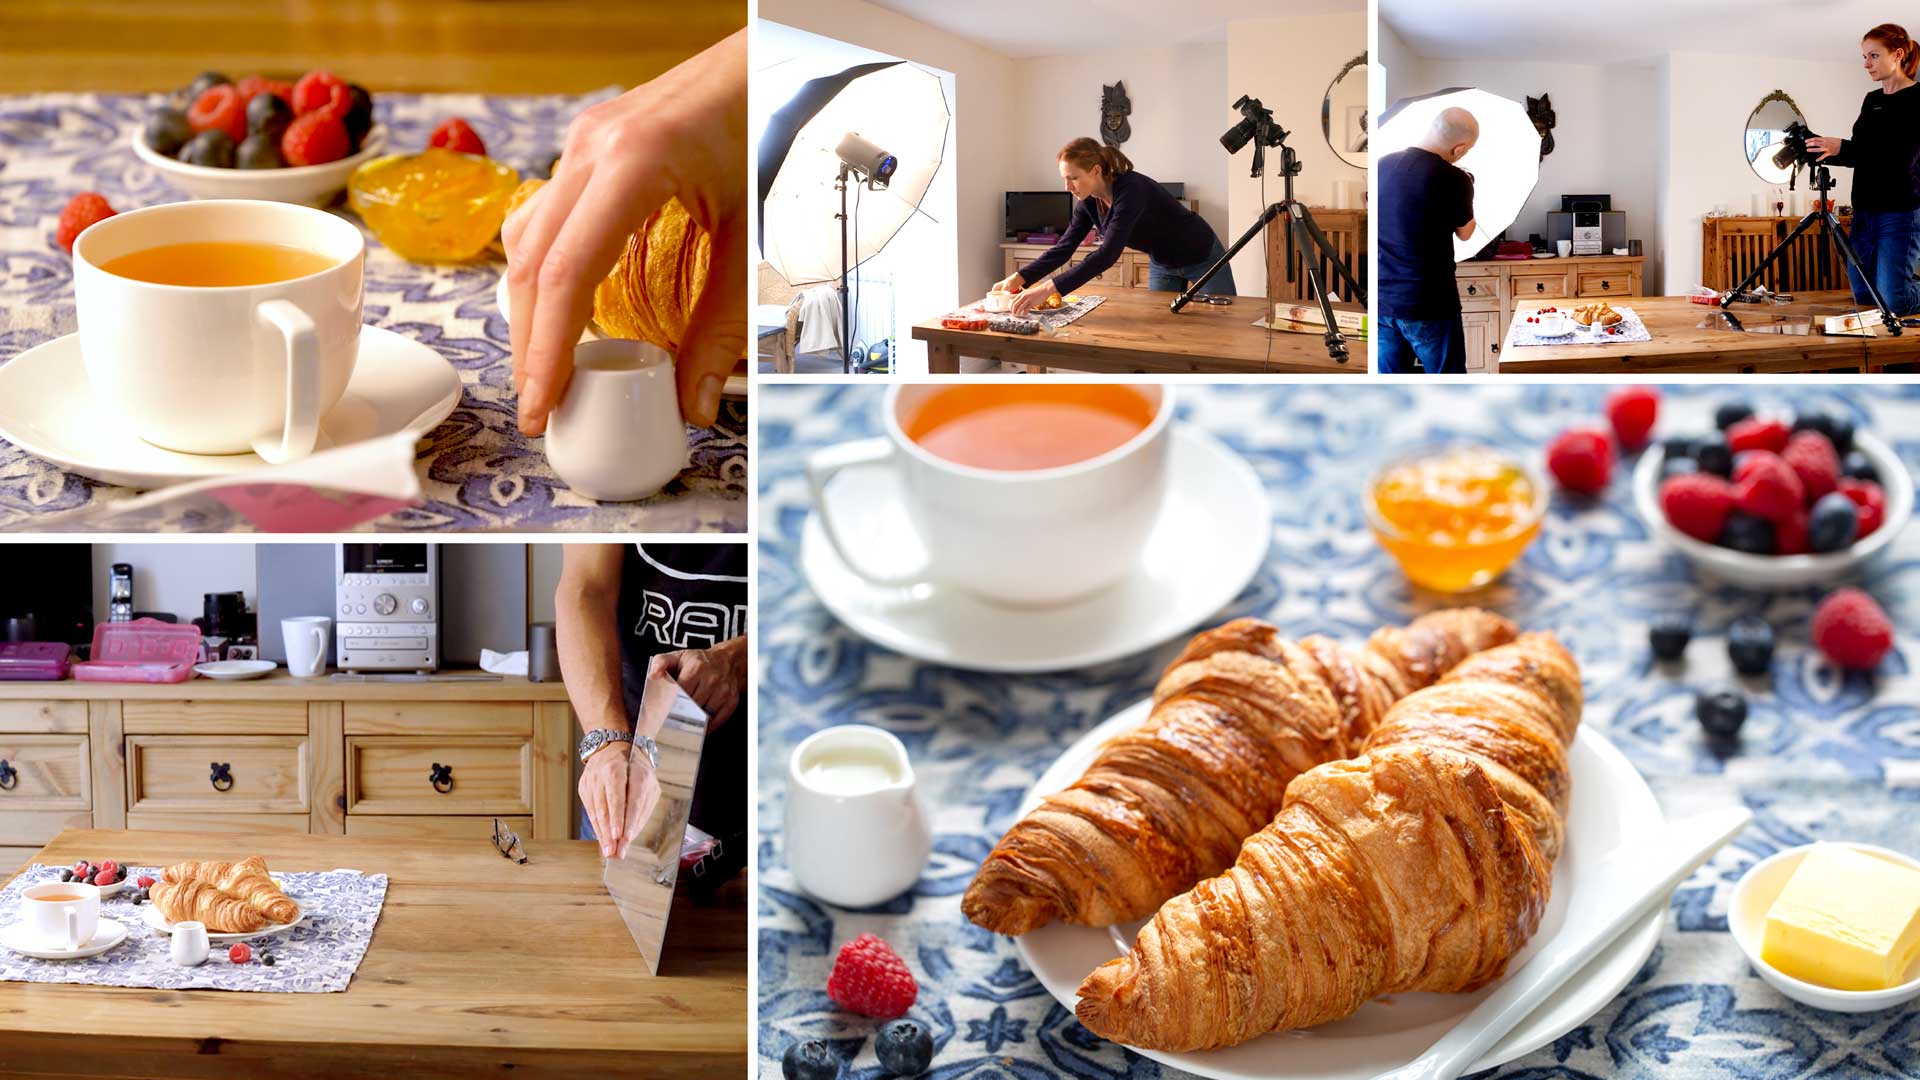 Simple Food Photography Setup: Croissants